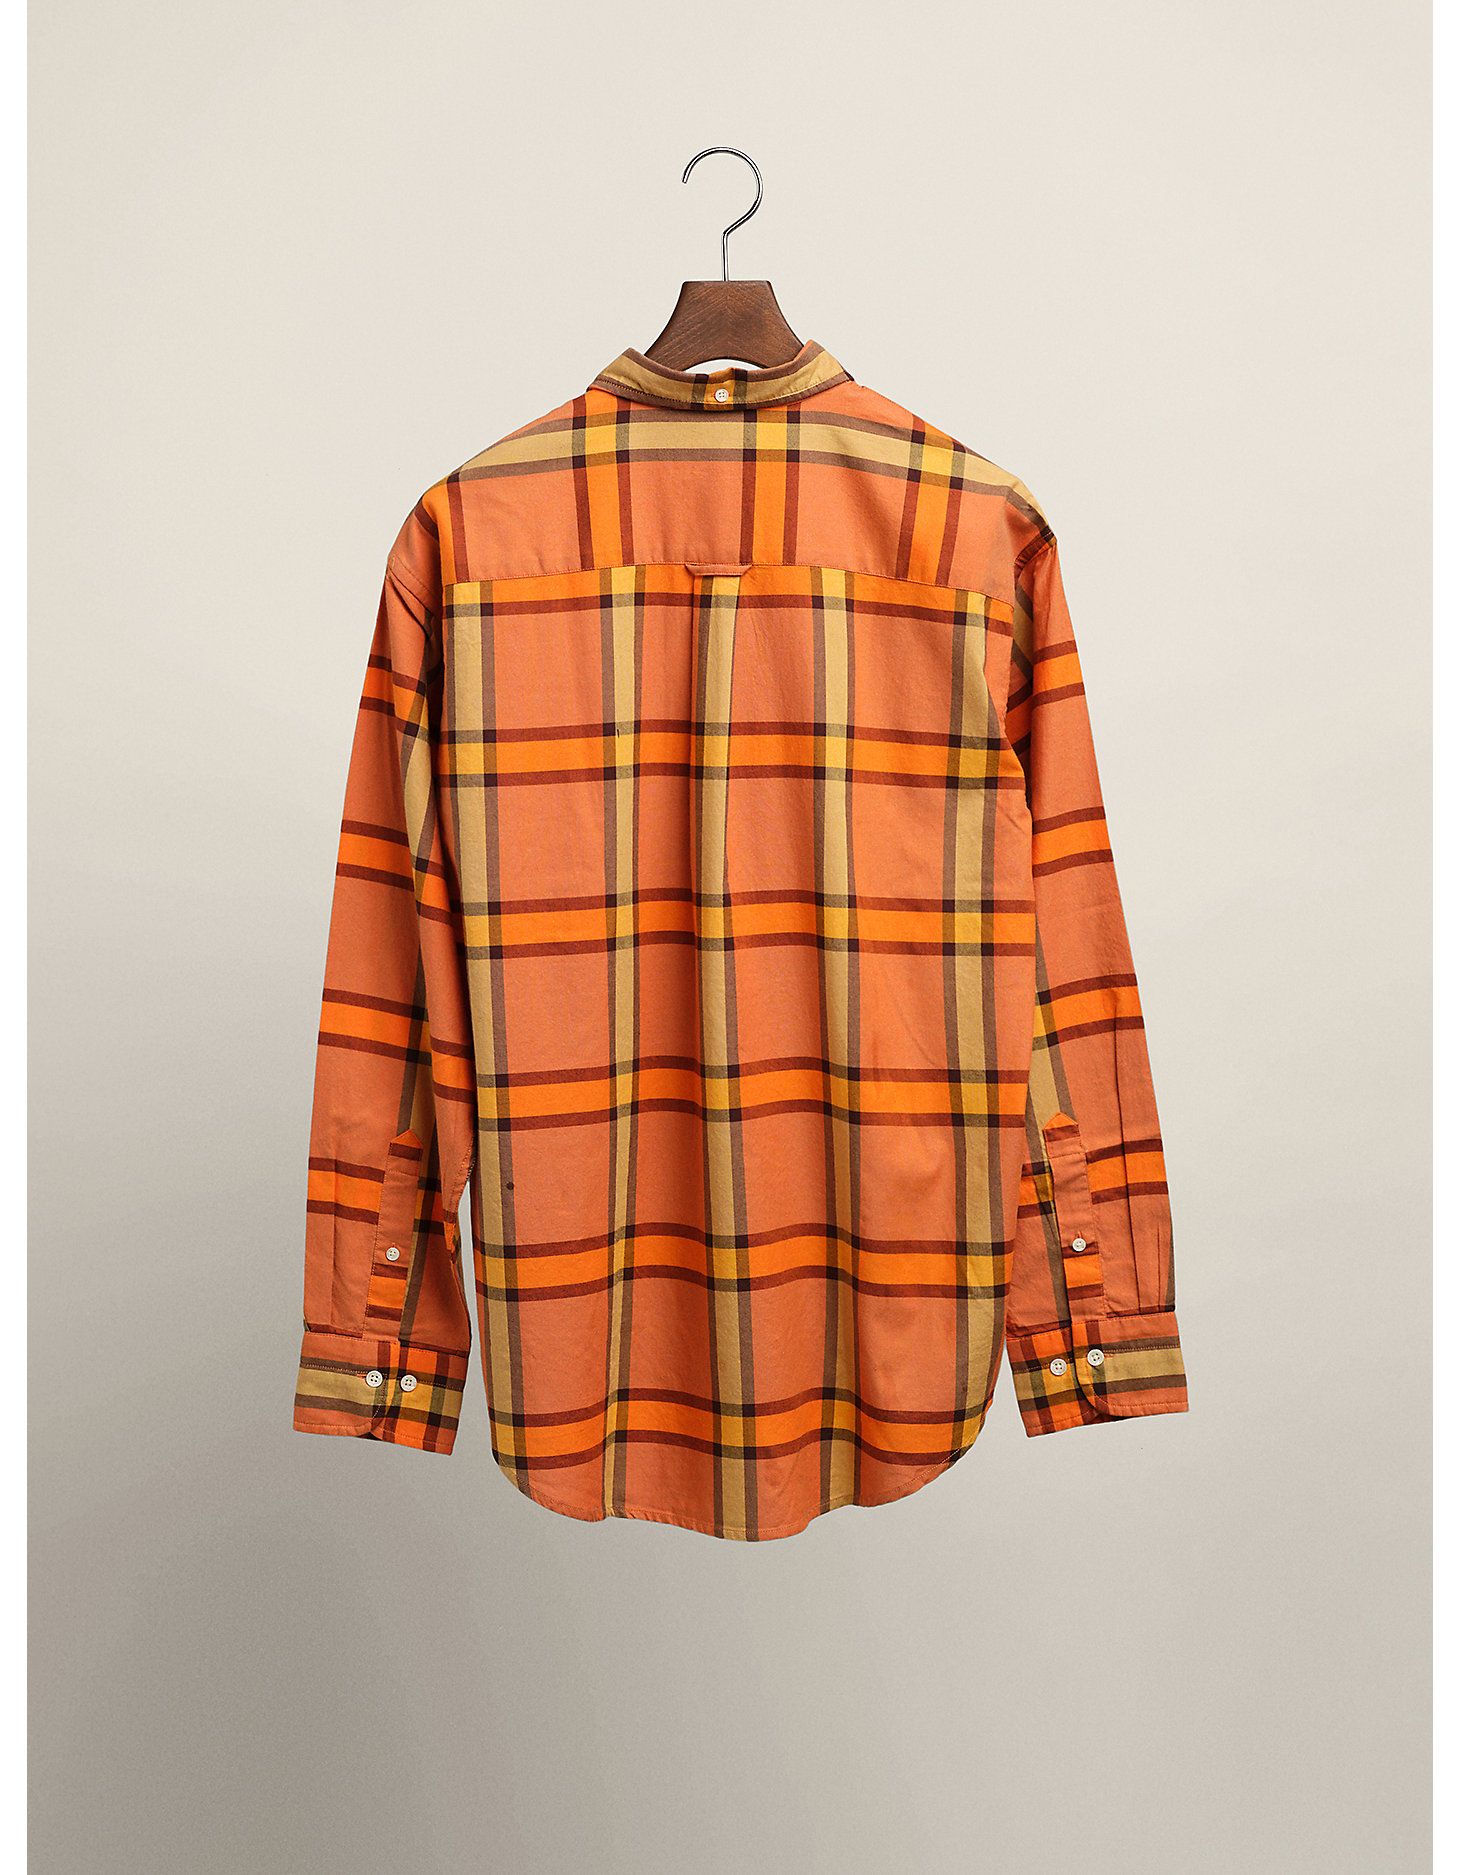 GANT x Wrangler Men's Plaid Oxford Shirt in Russet Orange alternative view 7